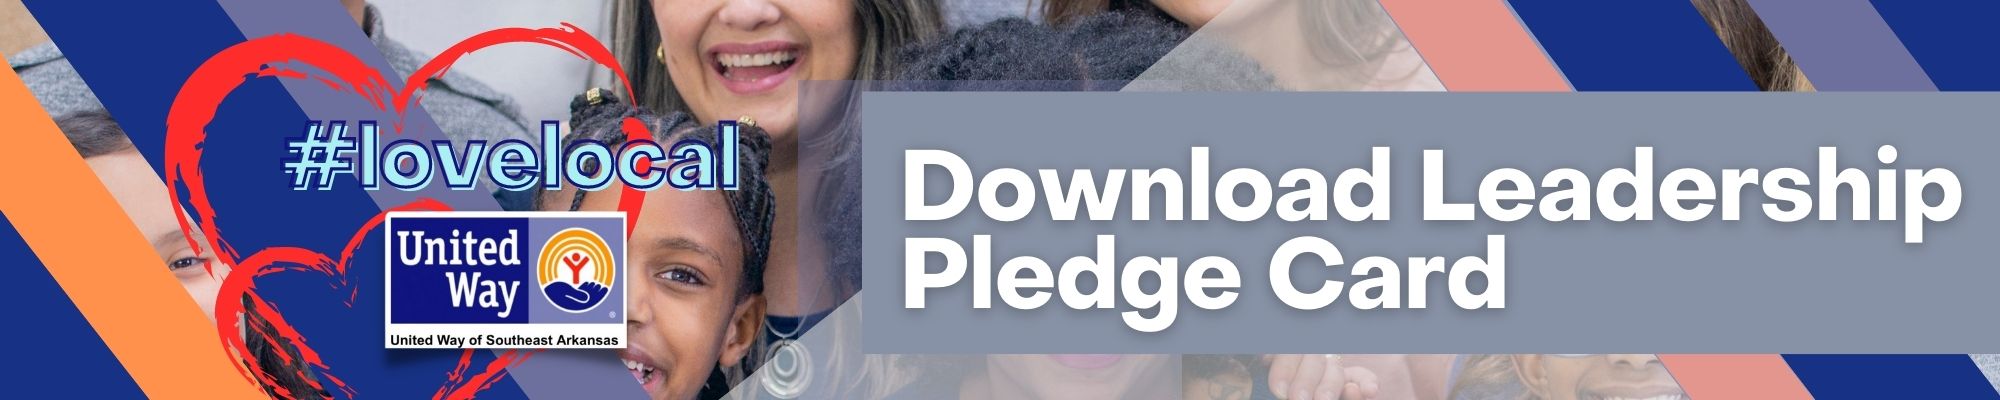 Download Leadership Pledge Card 